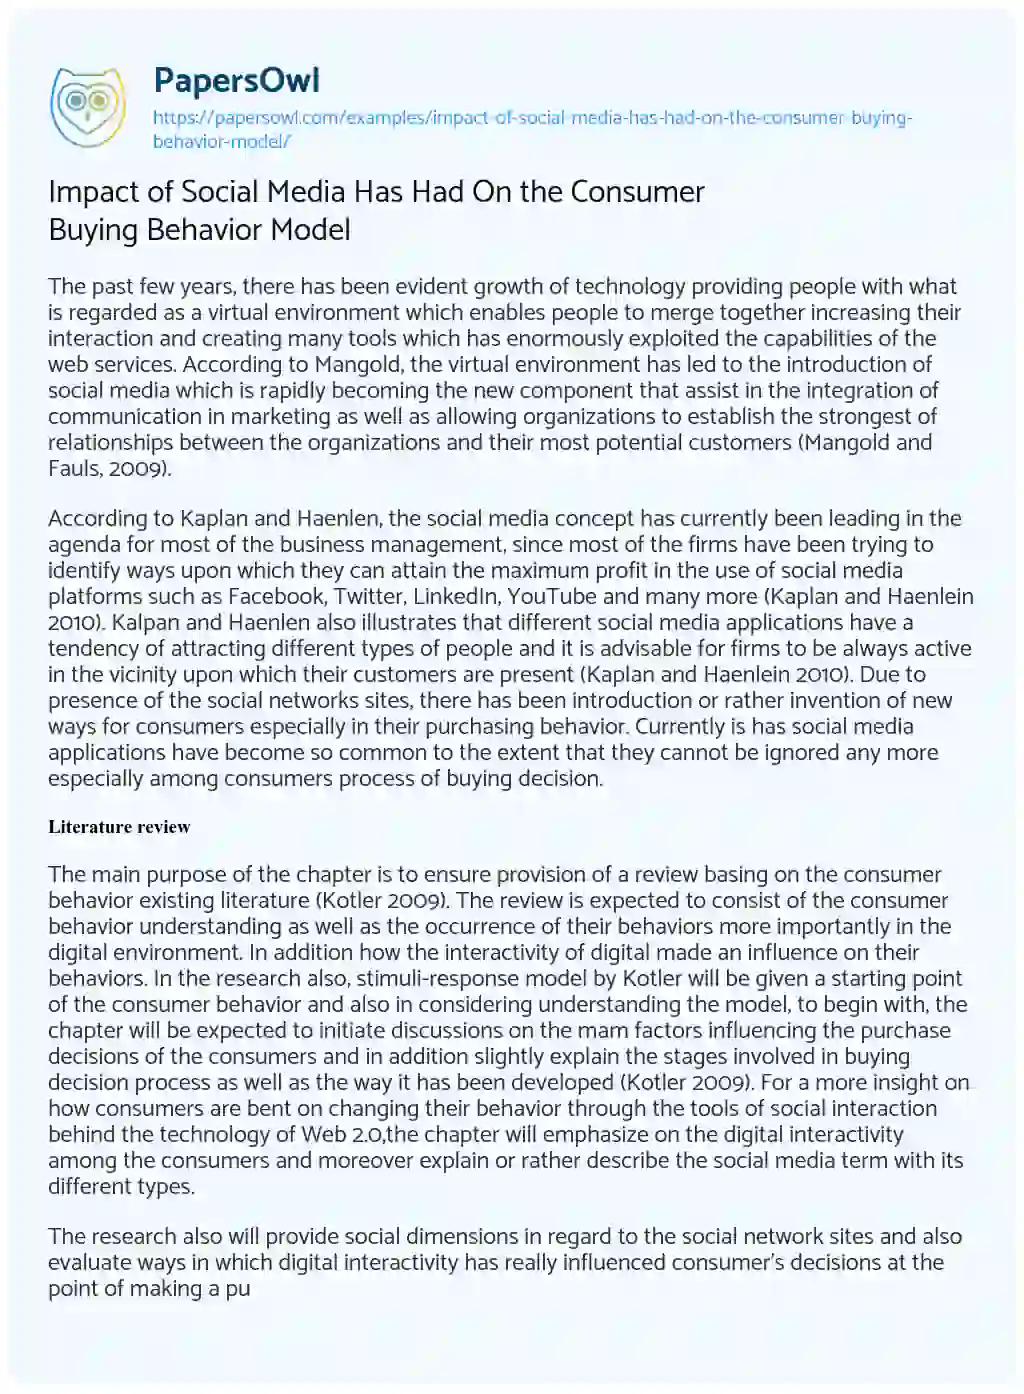 Essay on Impact of Social Media has had on the Consumer Buying Behavior Model